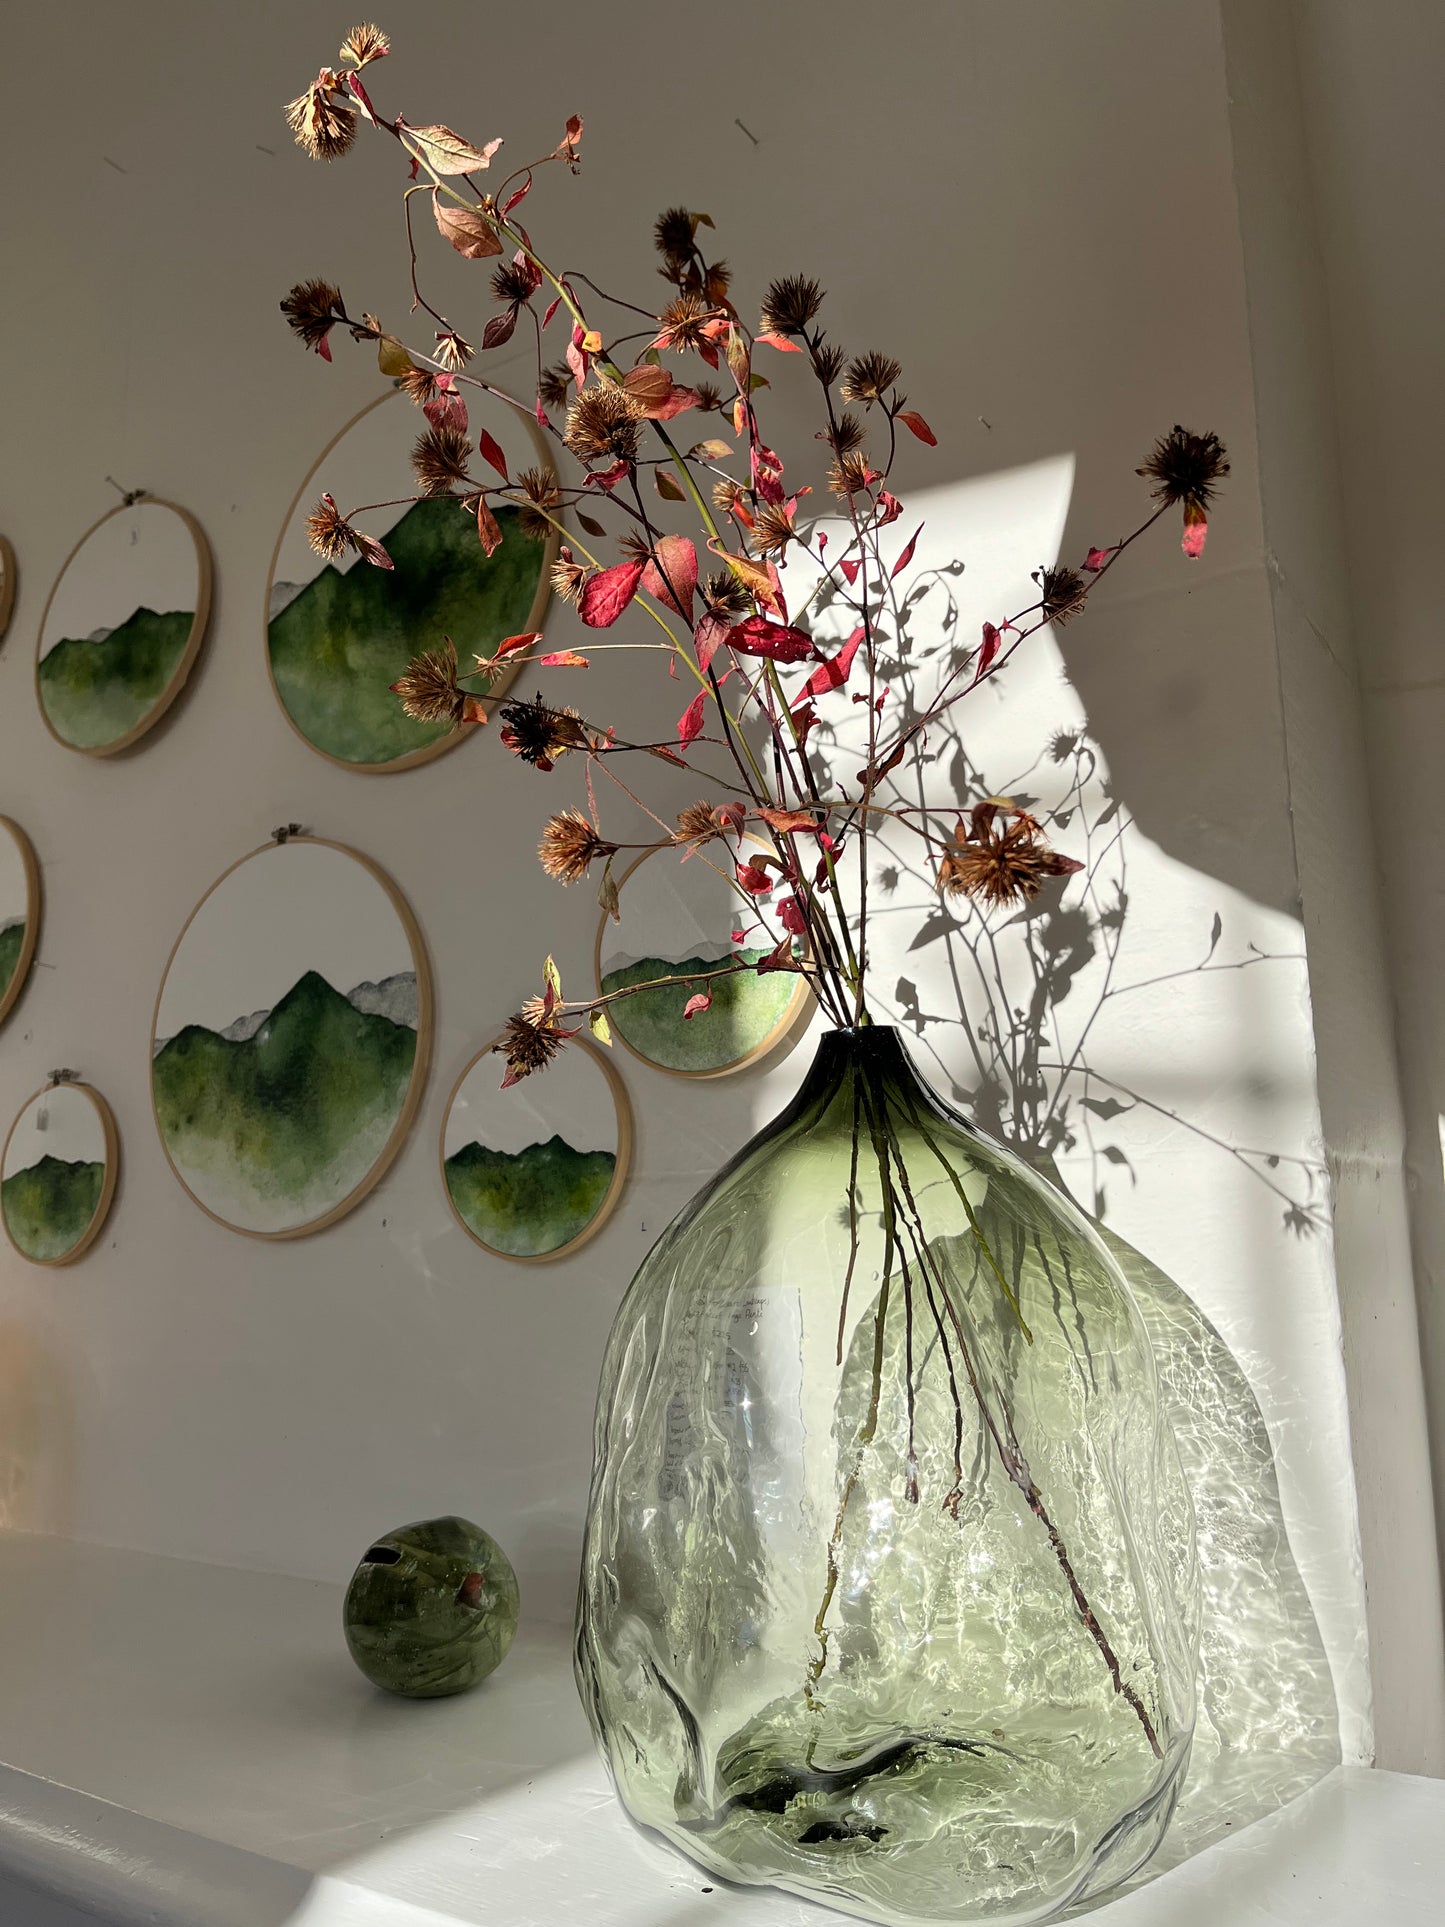 Handblown Glass 'Crushed' Vase - Eel Green